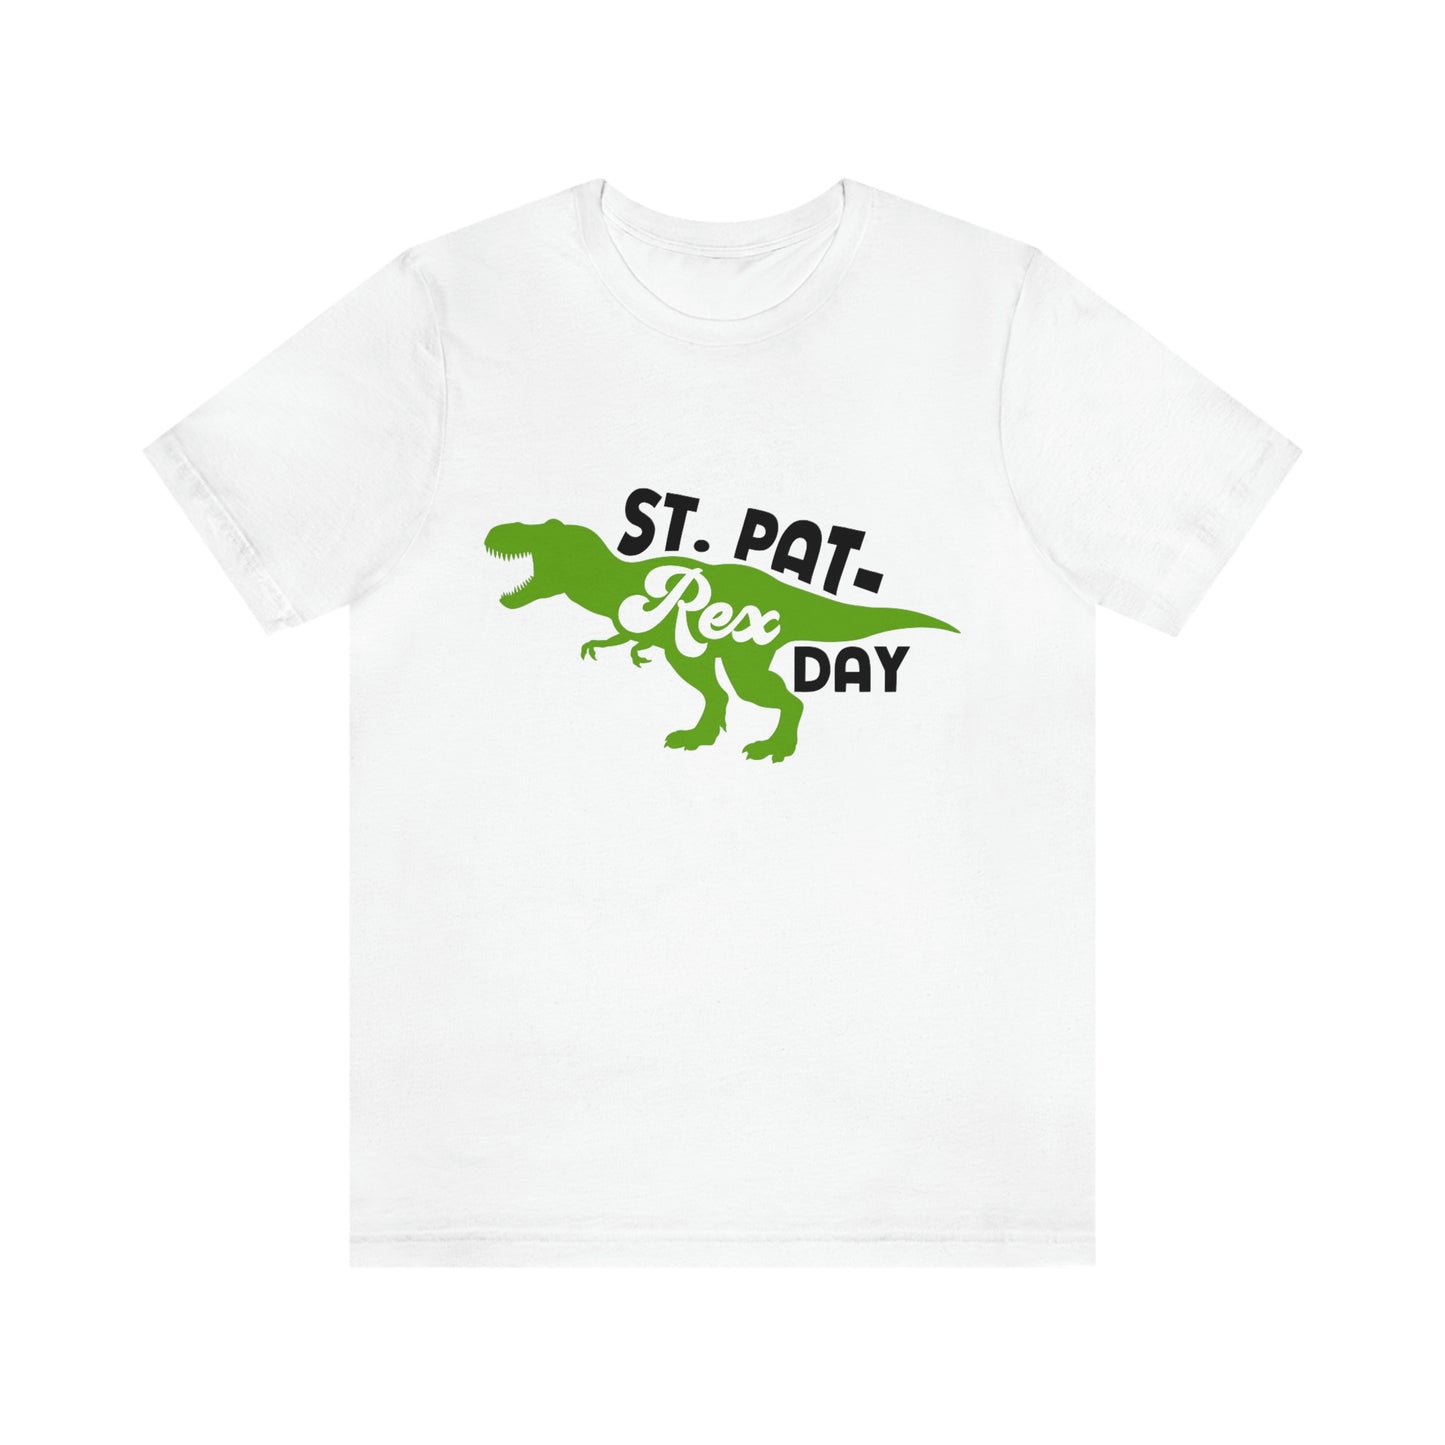 St Pat-Rex Day Tee